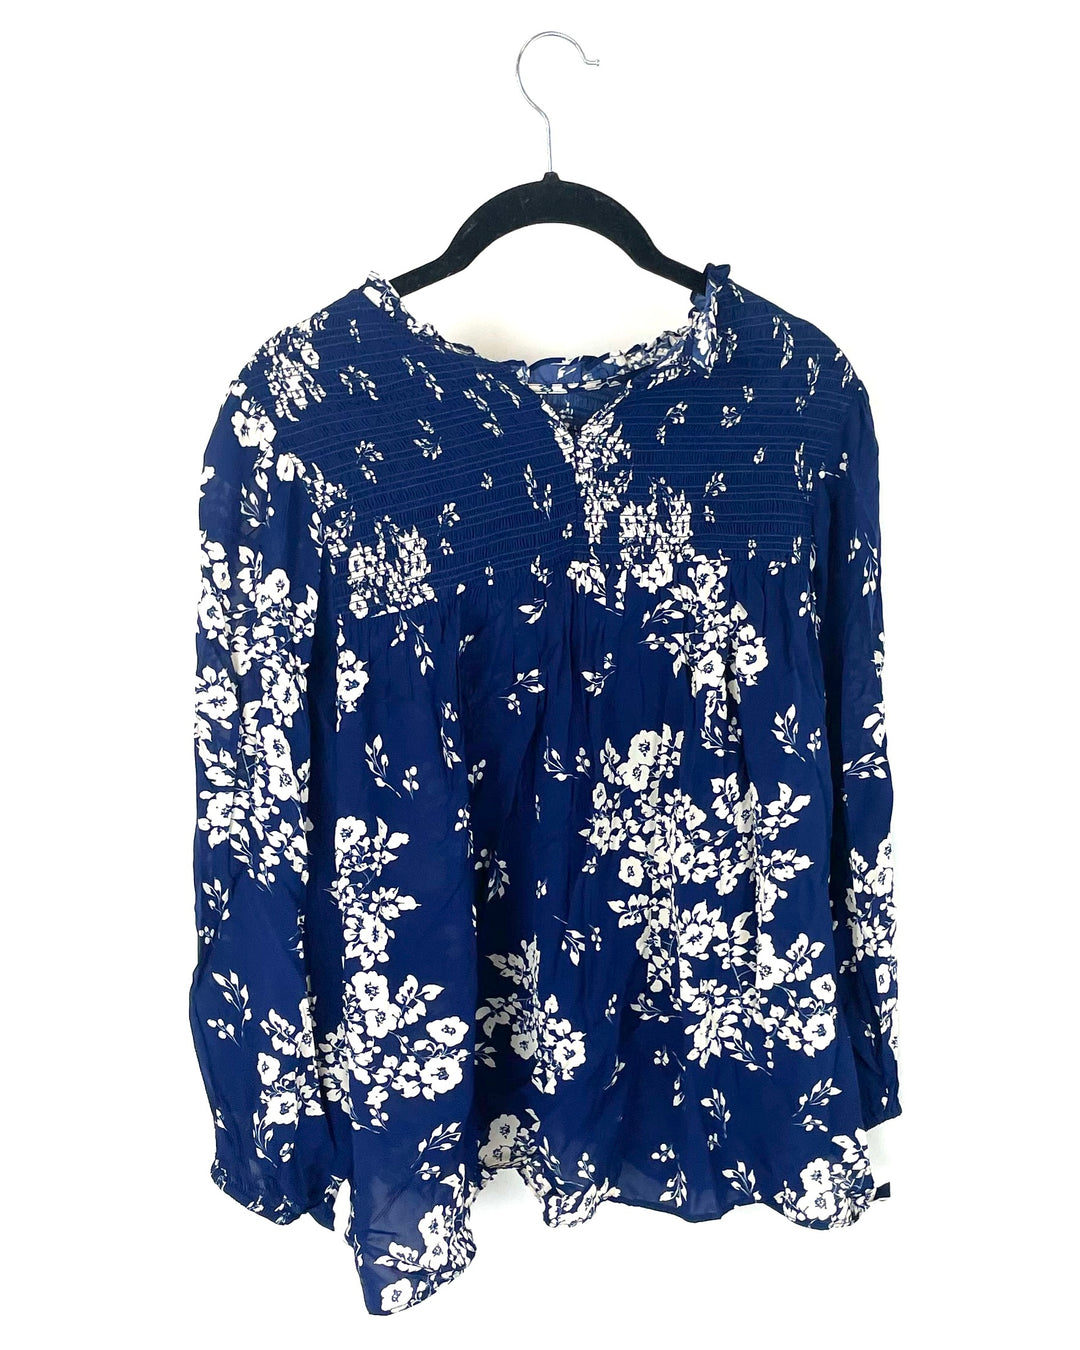 Blue Floral Long Sleeve Blouse - Size 8/10